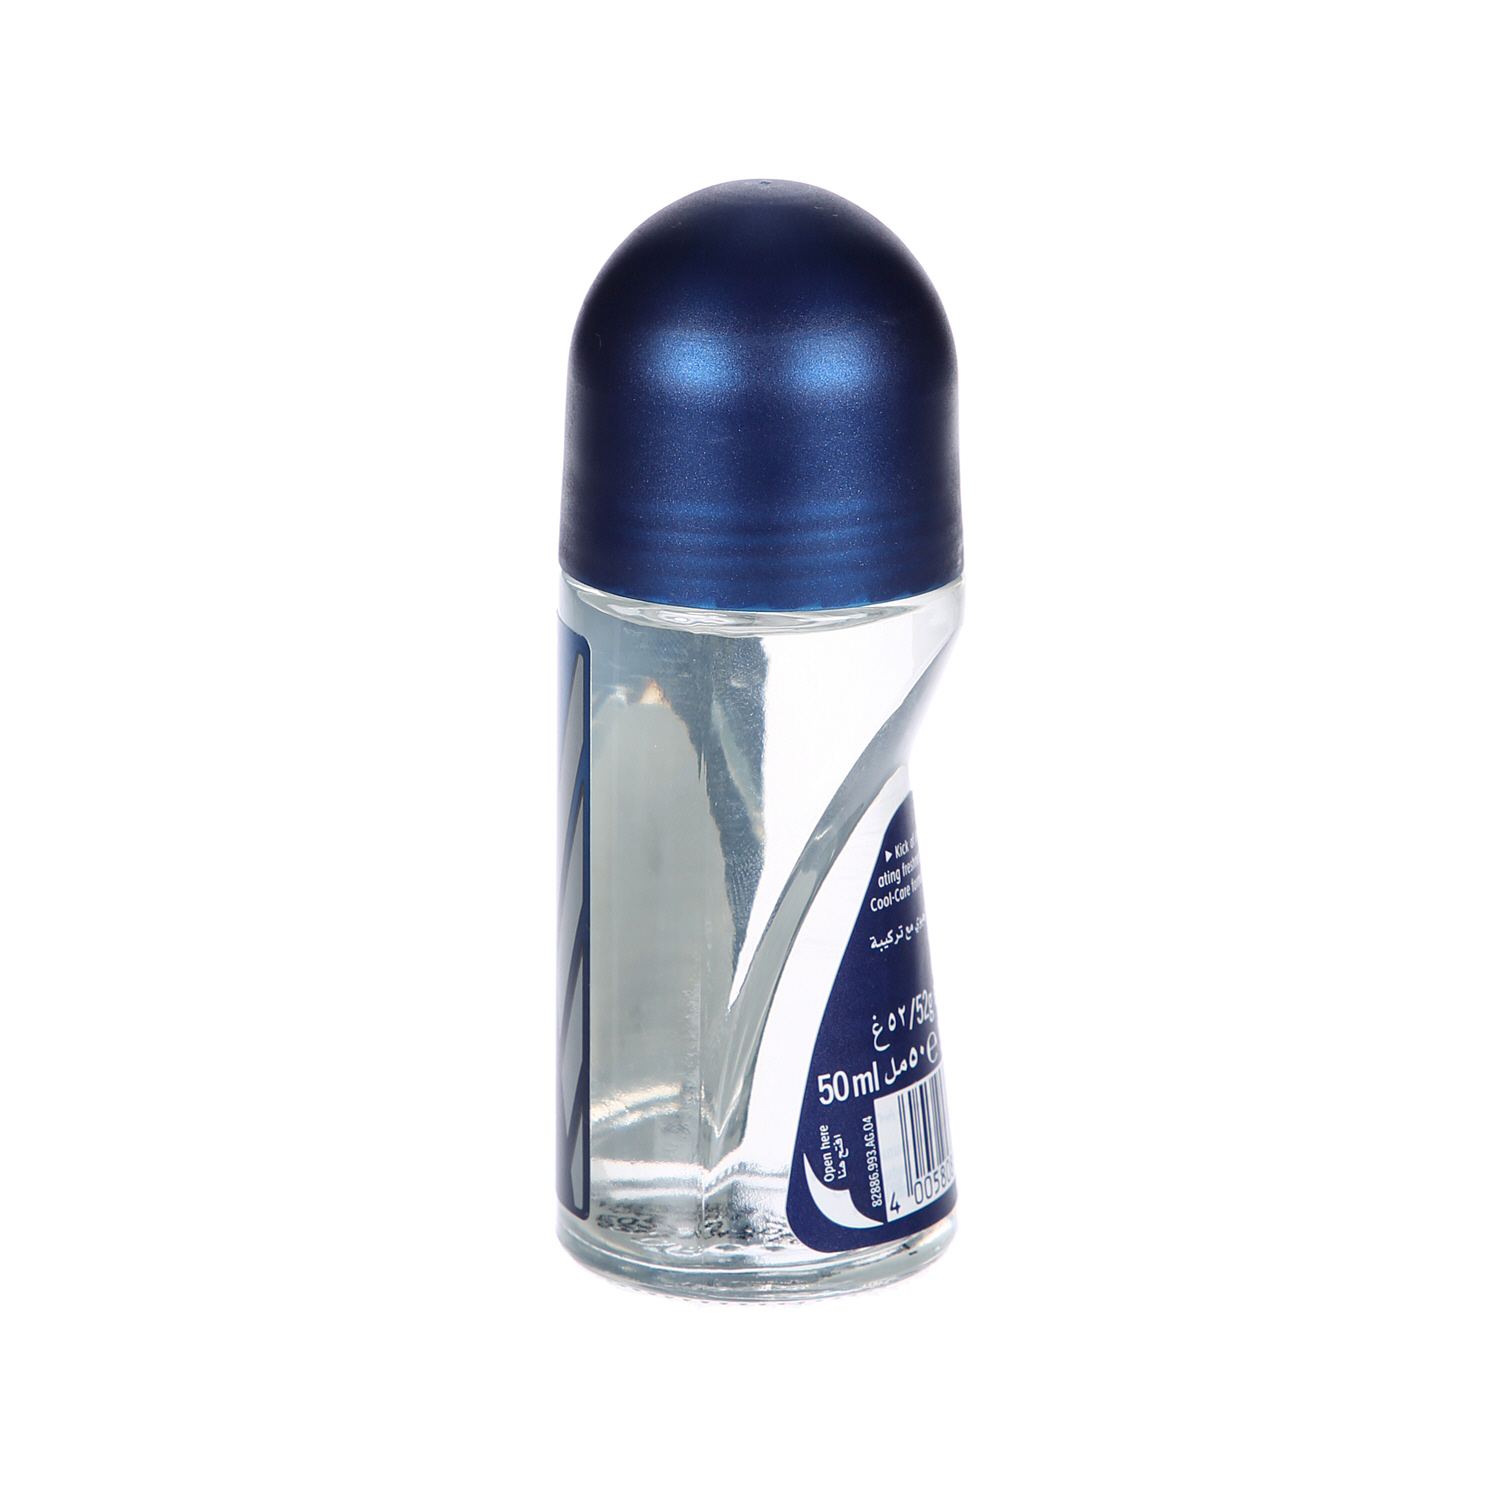 Nivea Deodorant Roll On Aqua Cool 50ml